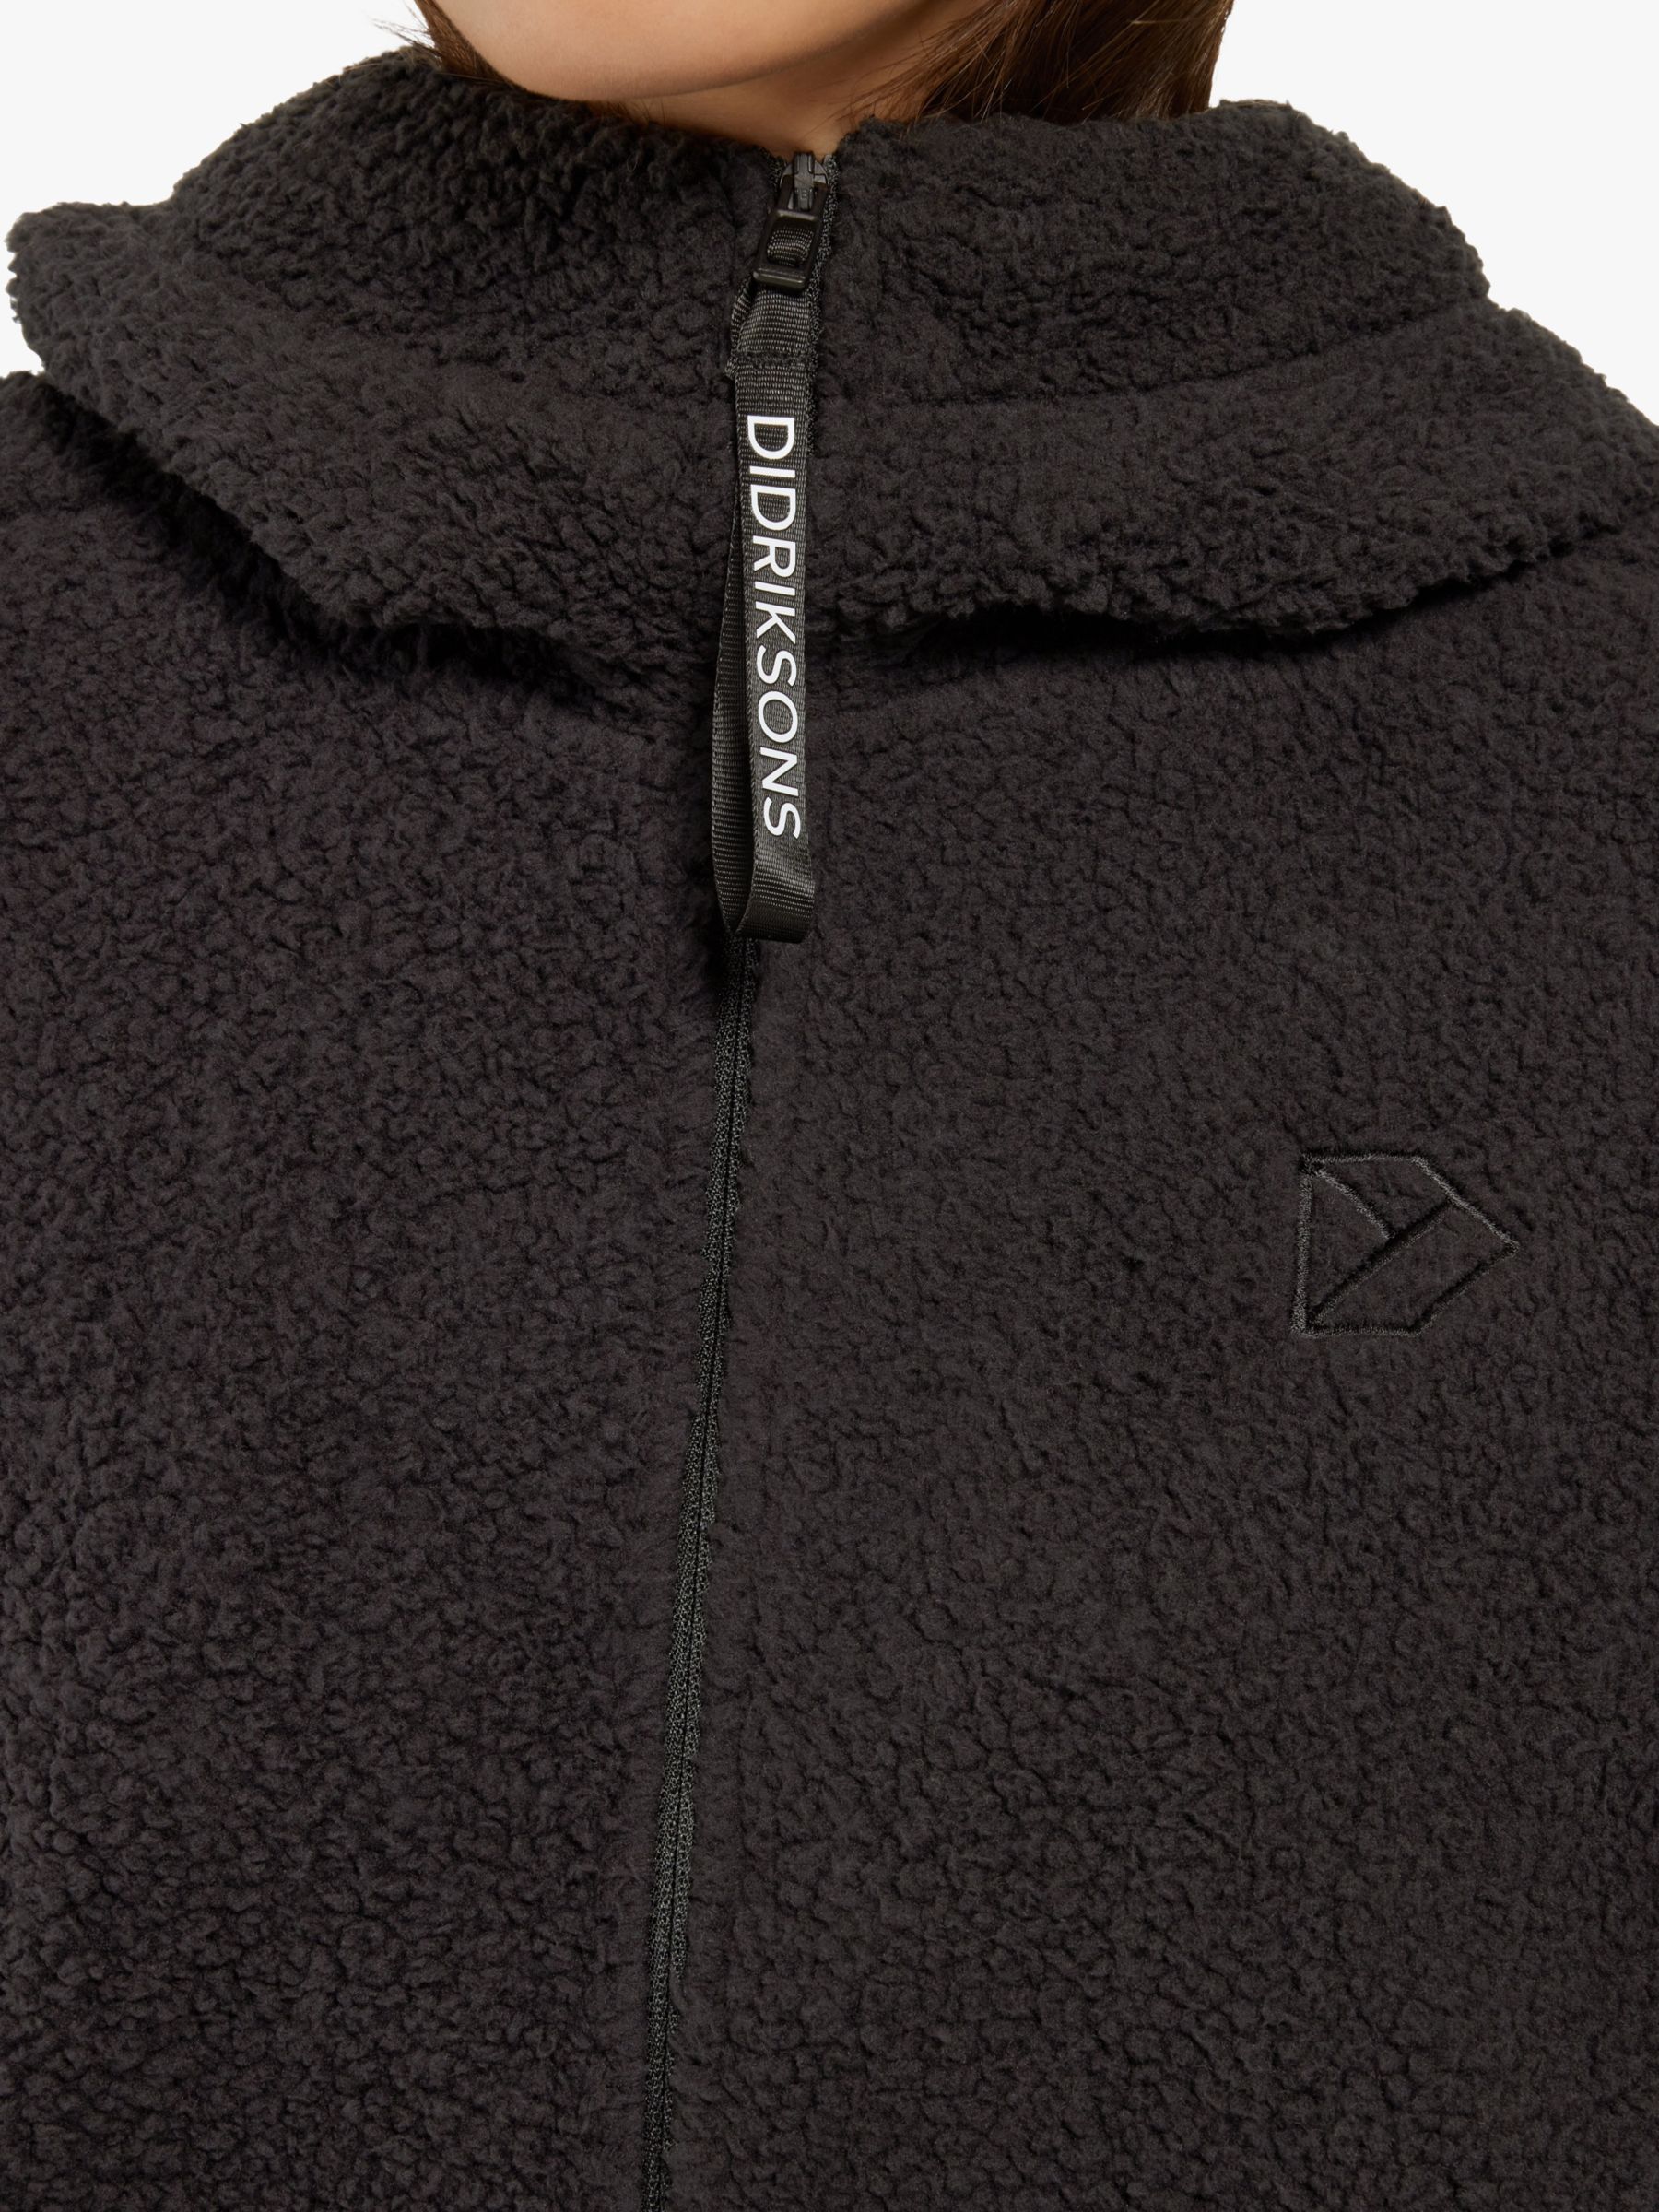 Buy Didriksons Anniken Zip Through Fleece Jacket, Black Online at johnlewis.com